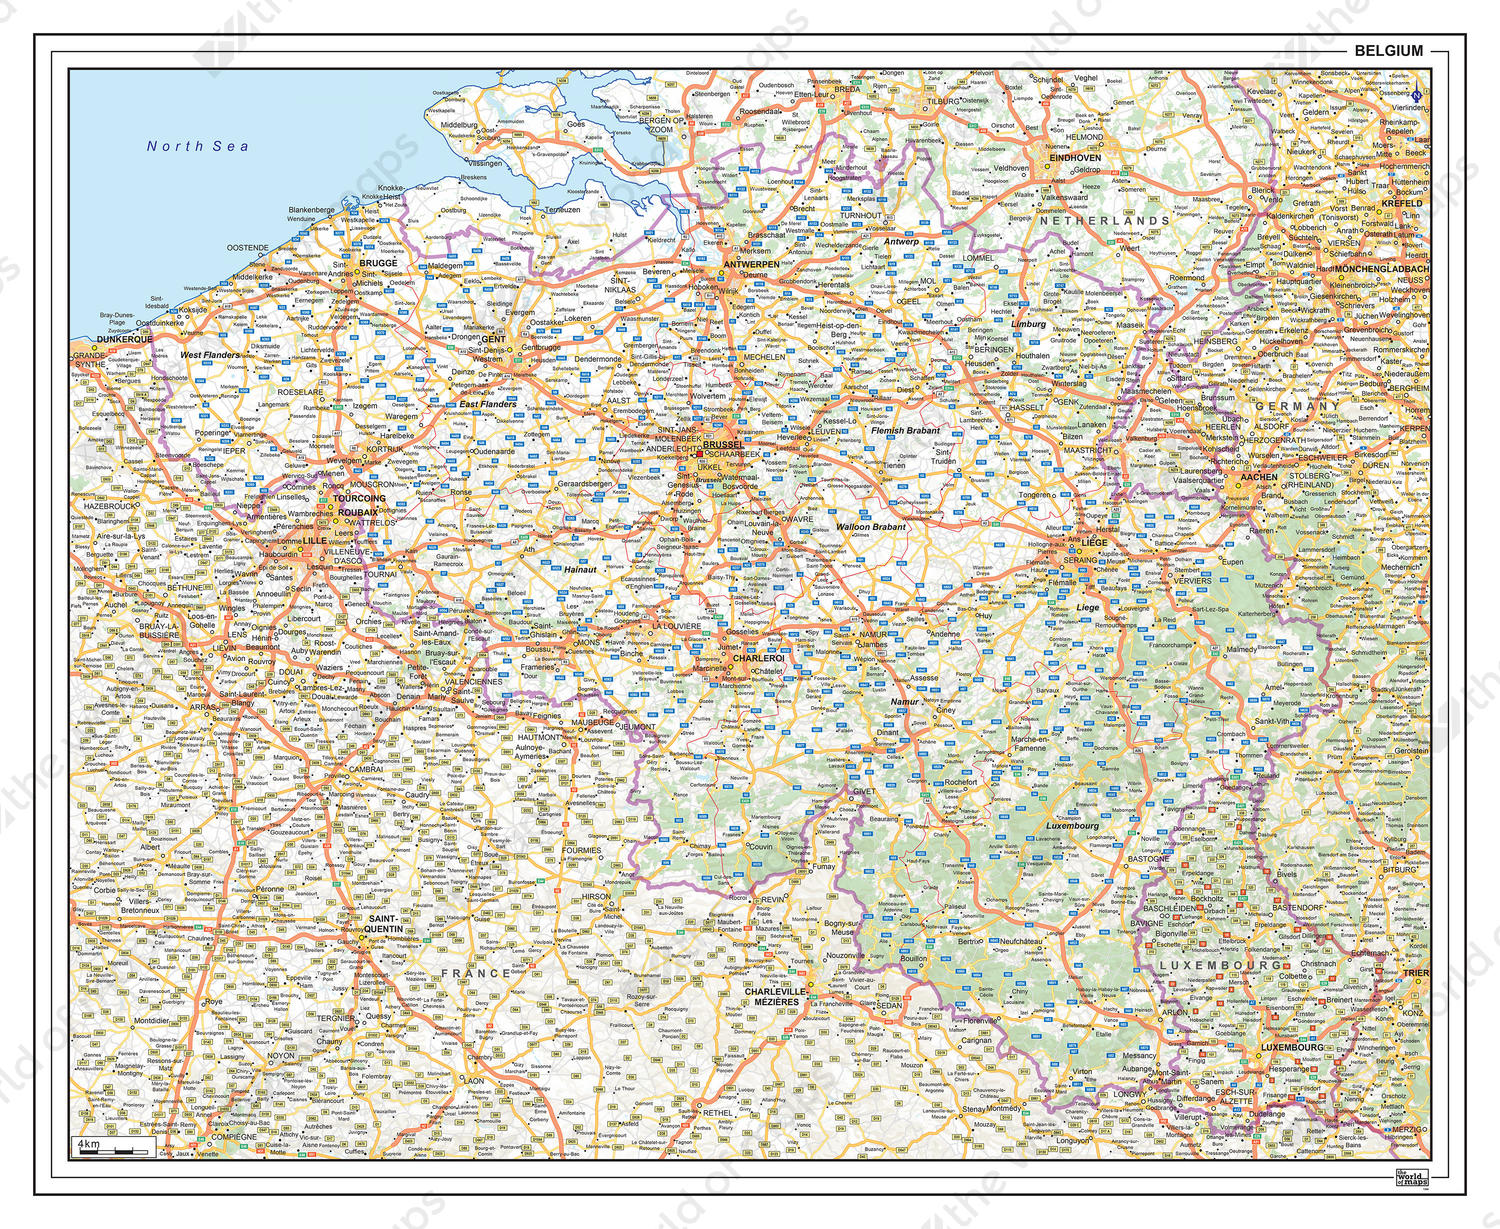 Digital Roadmap Belgium 1364 | The World of Maps.com